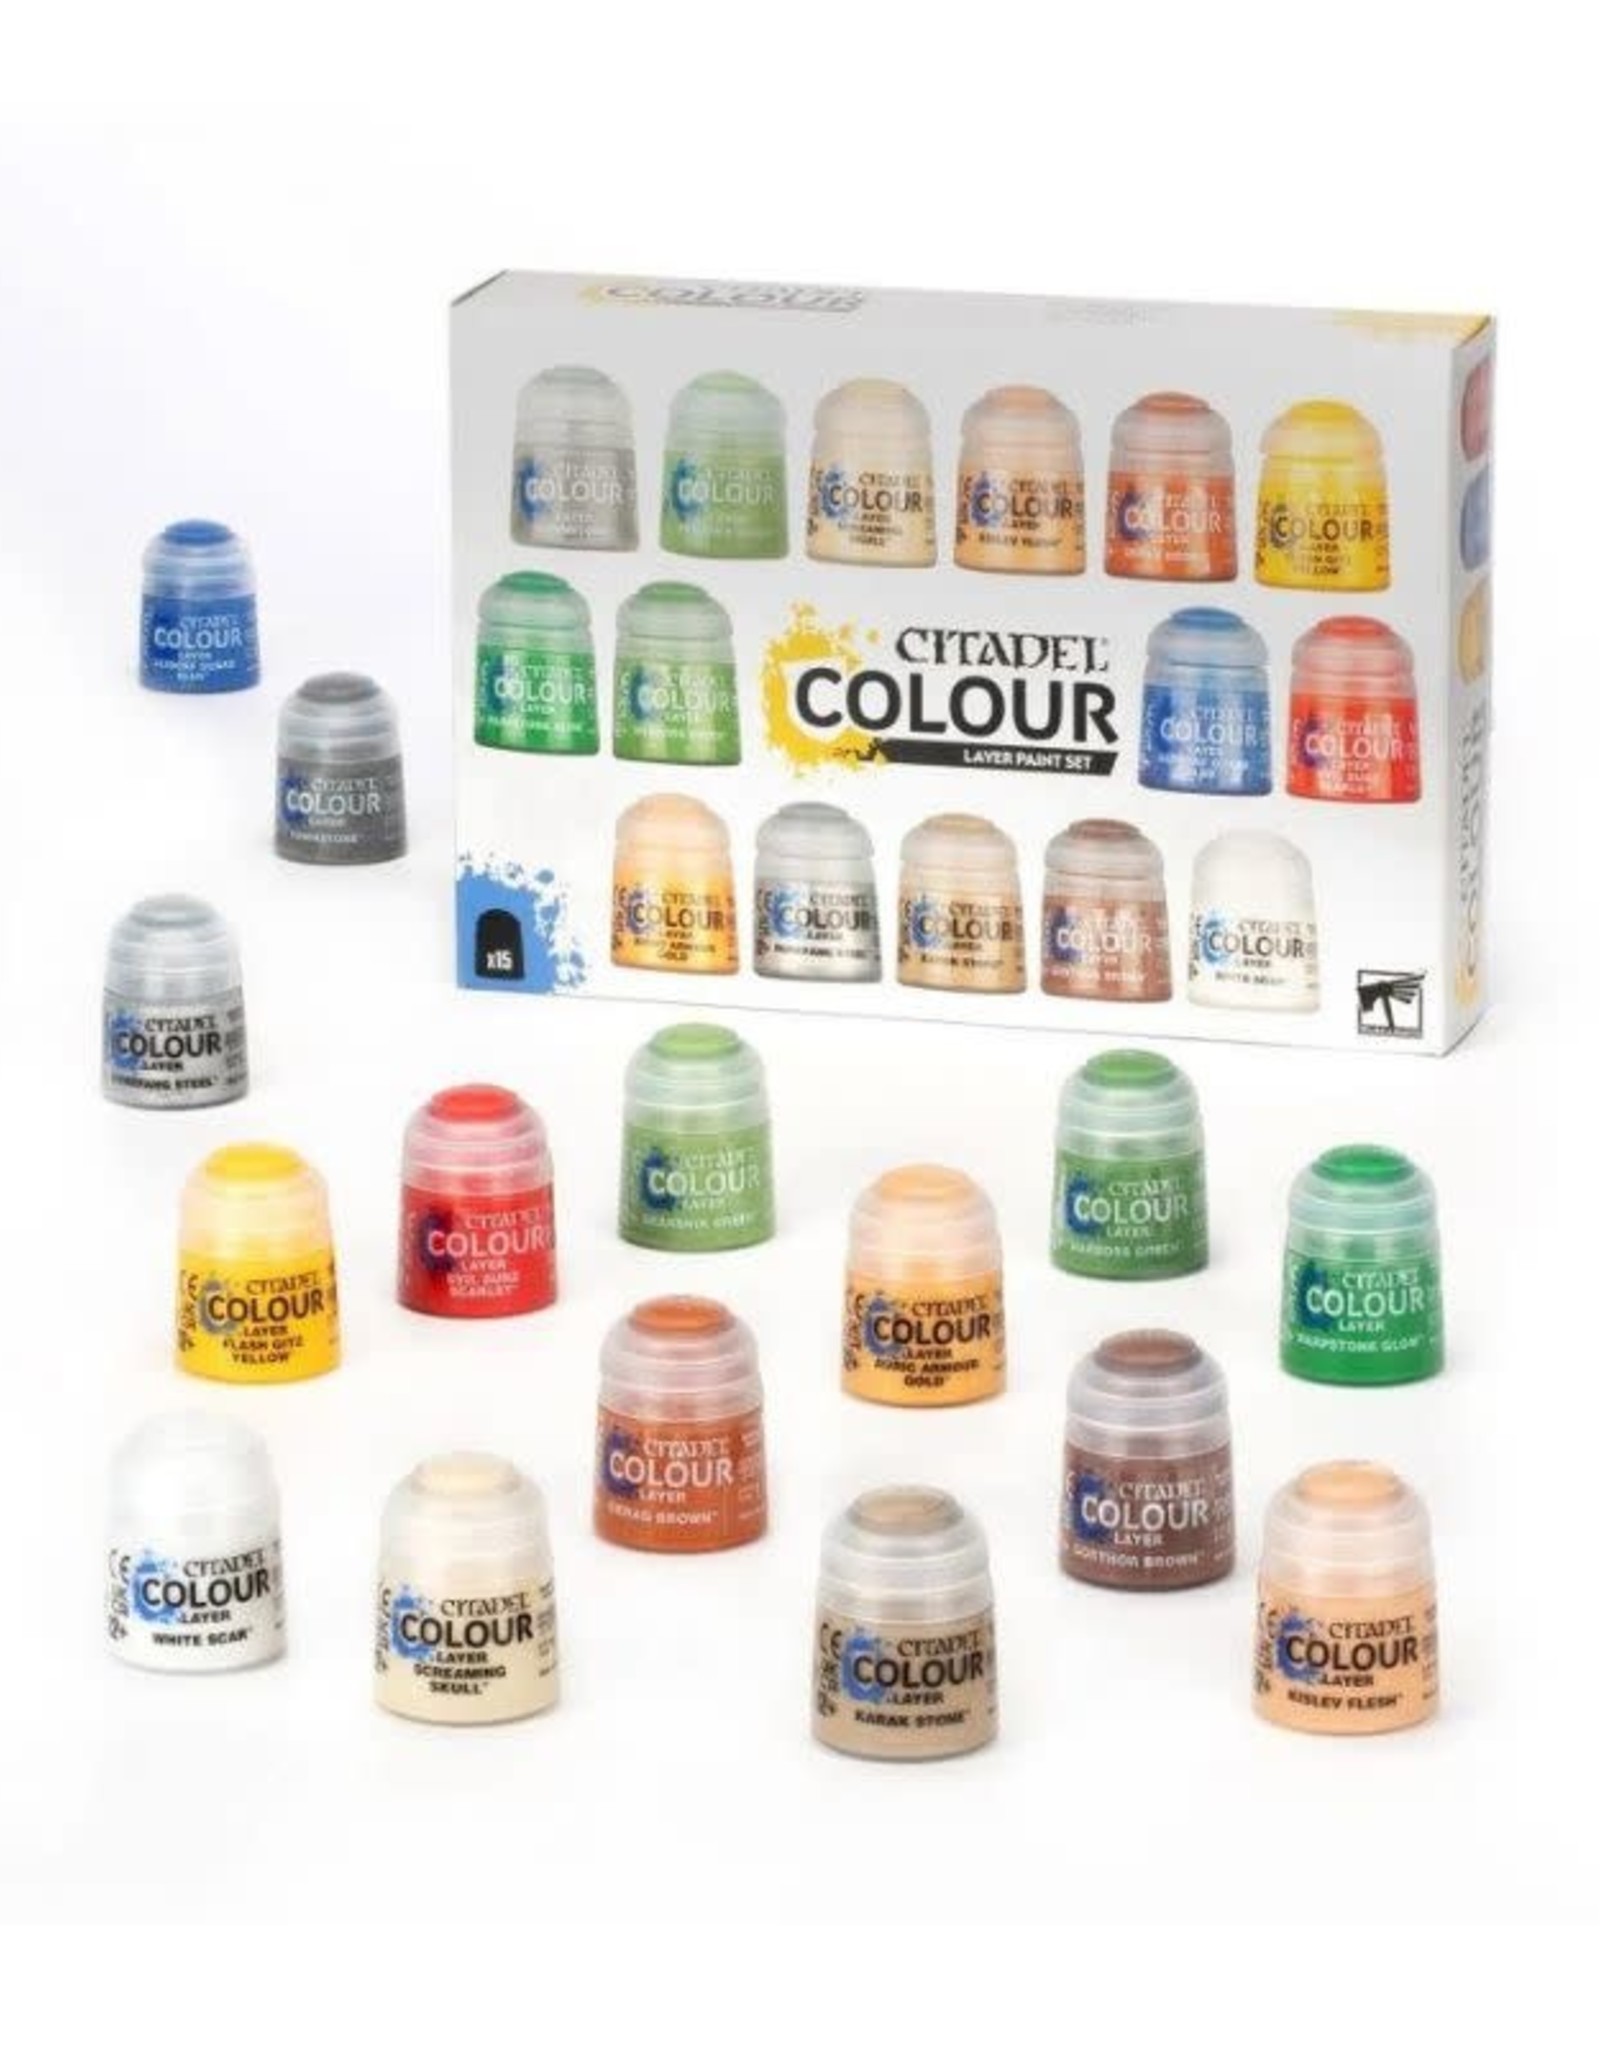 Citadel Colour: Layer Paint Set - Family Fun Hobbies